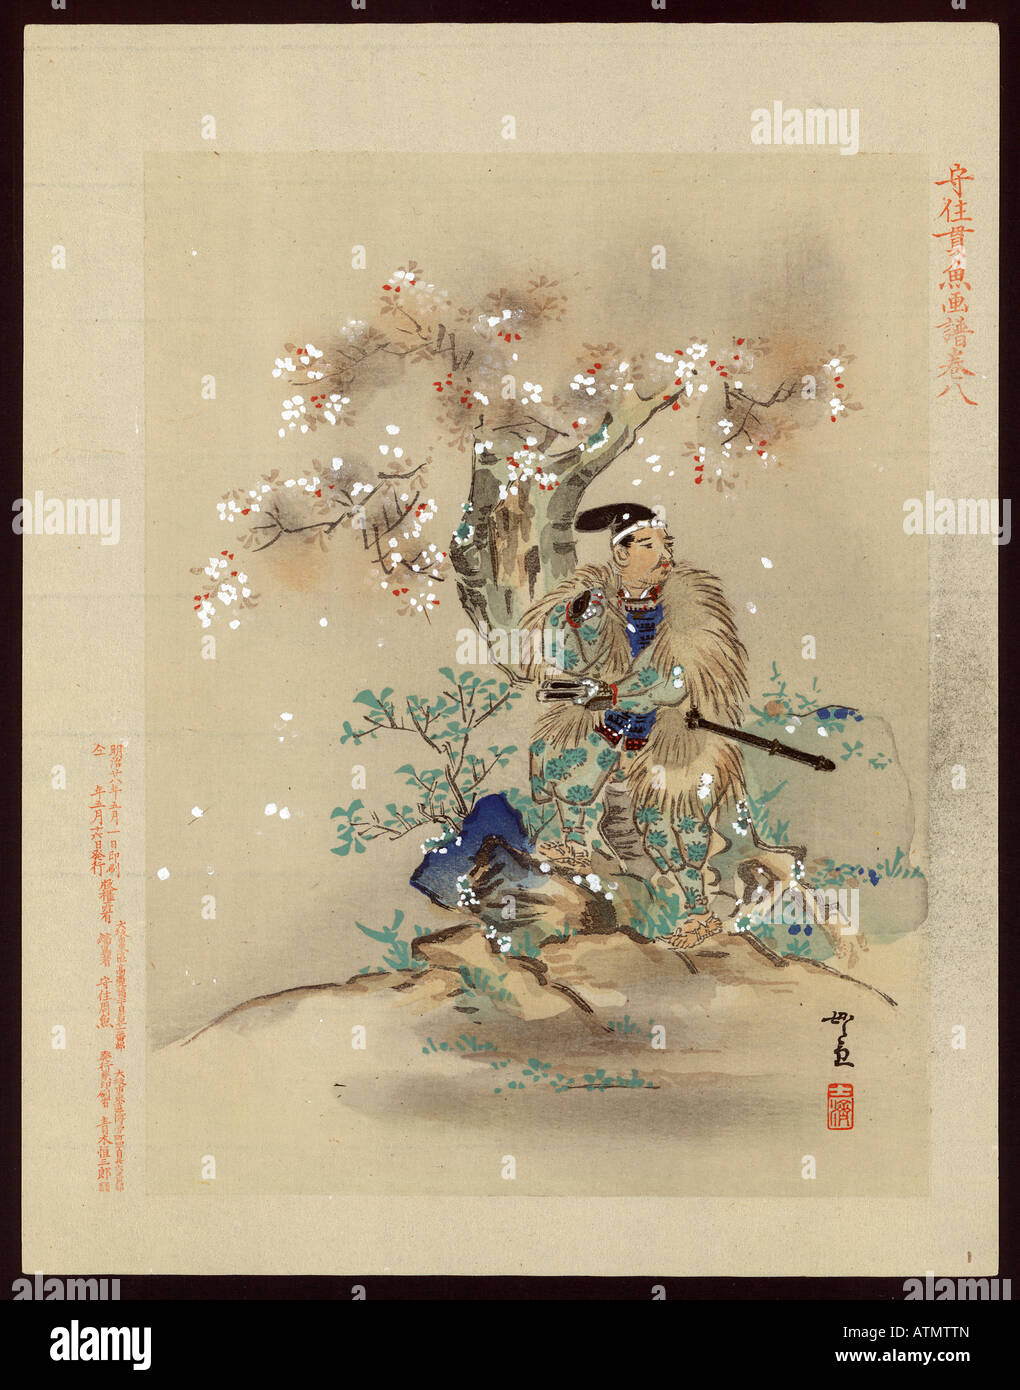 Japanese Ukiyo e print Samurai under a blooming blossom cherry tree season Stock Photo